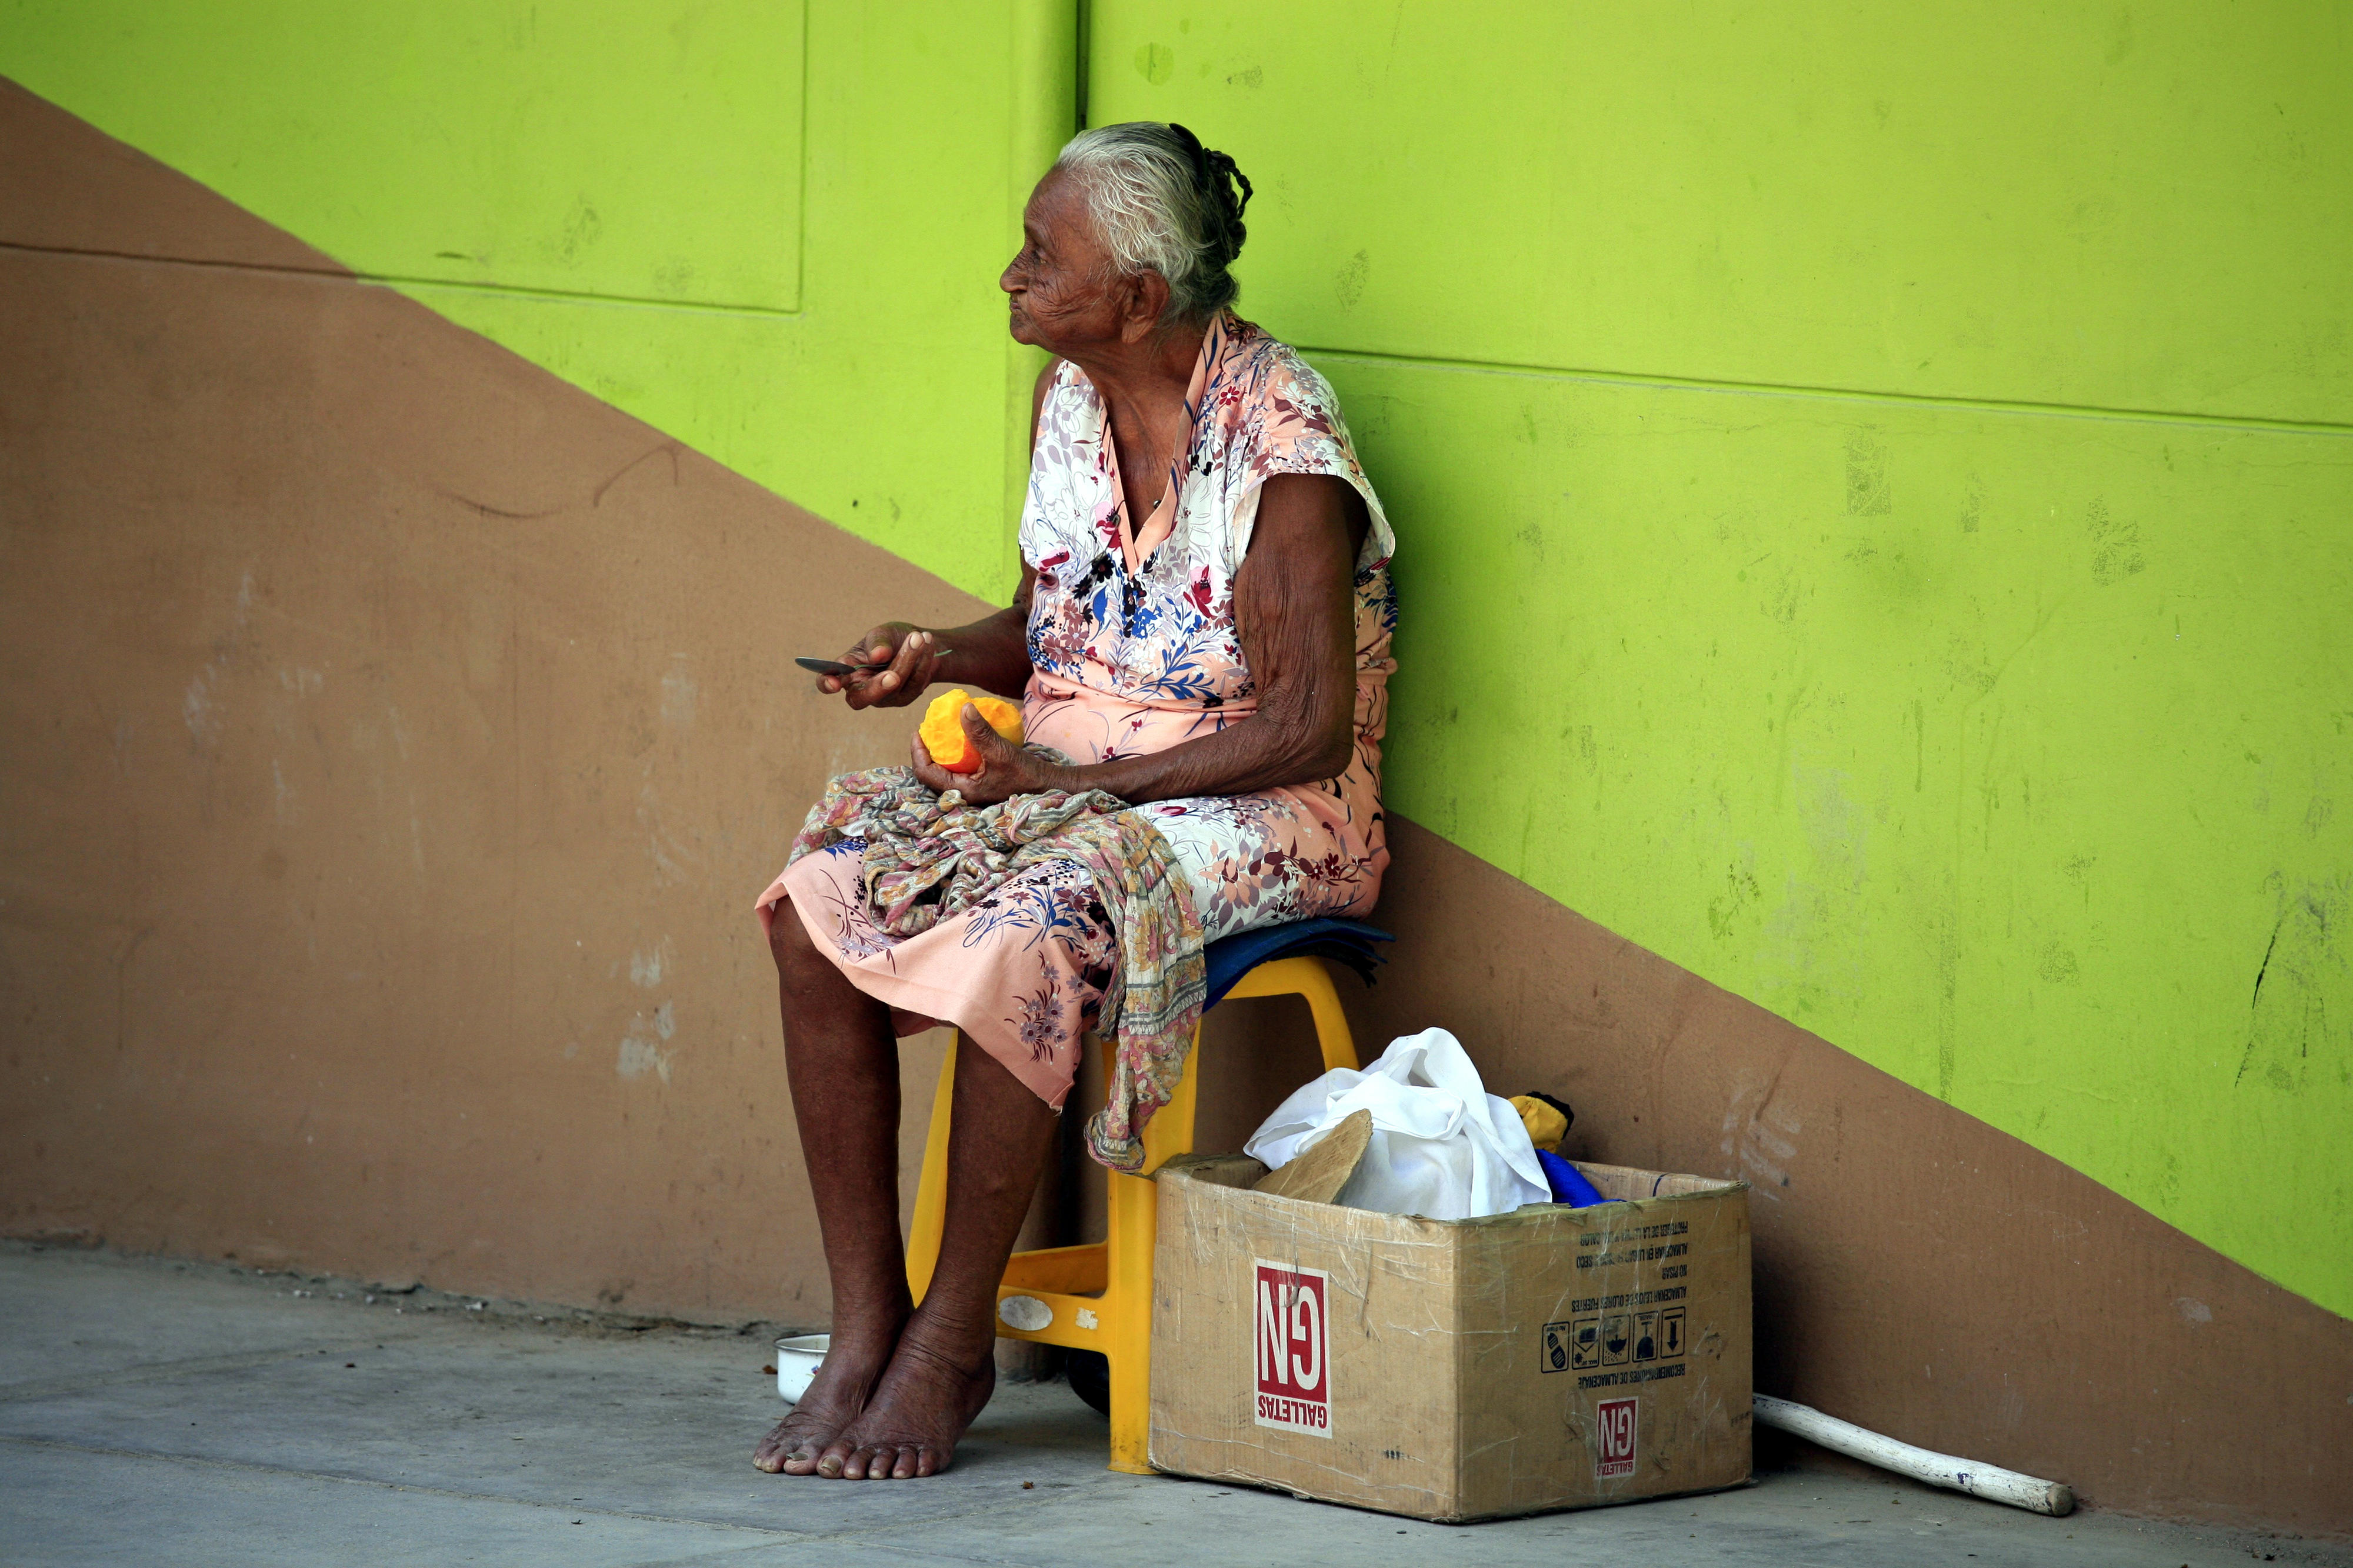 An older woman peeling a mango by the side of a street